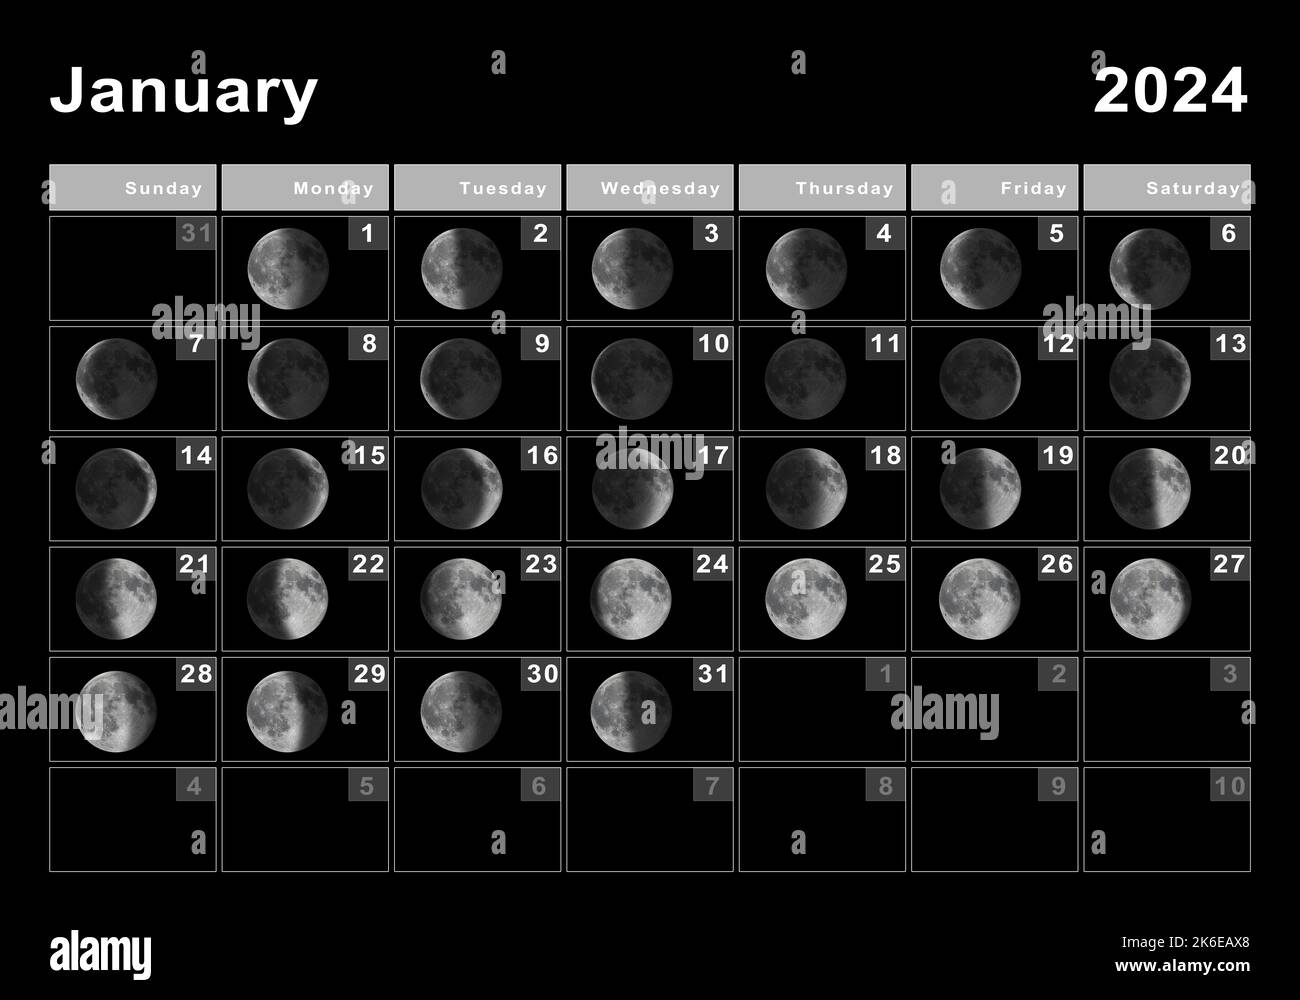 January 2024 Calendar With Moon Phases 2024 CALENDAR PRINTABLE - Free Printable 2024 Calendar With Holidays & Moon Phases